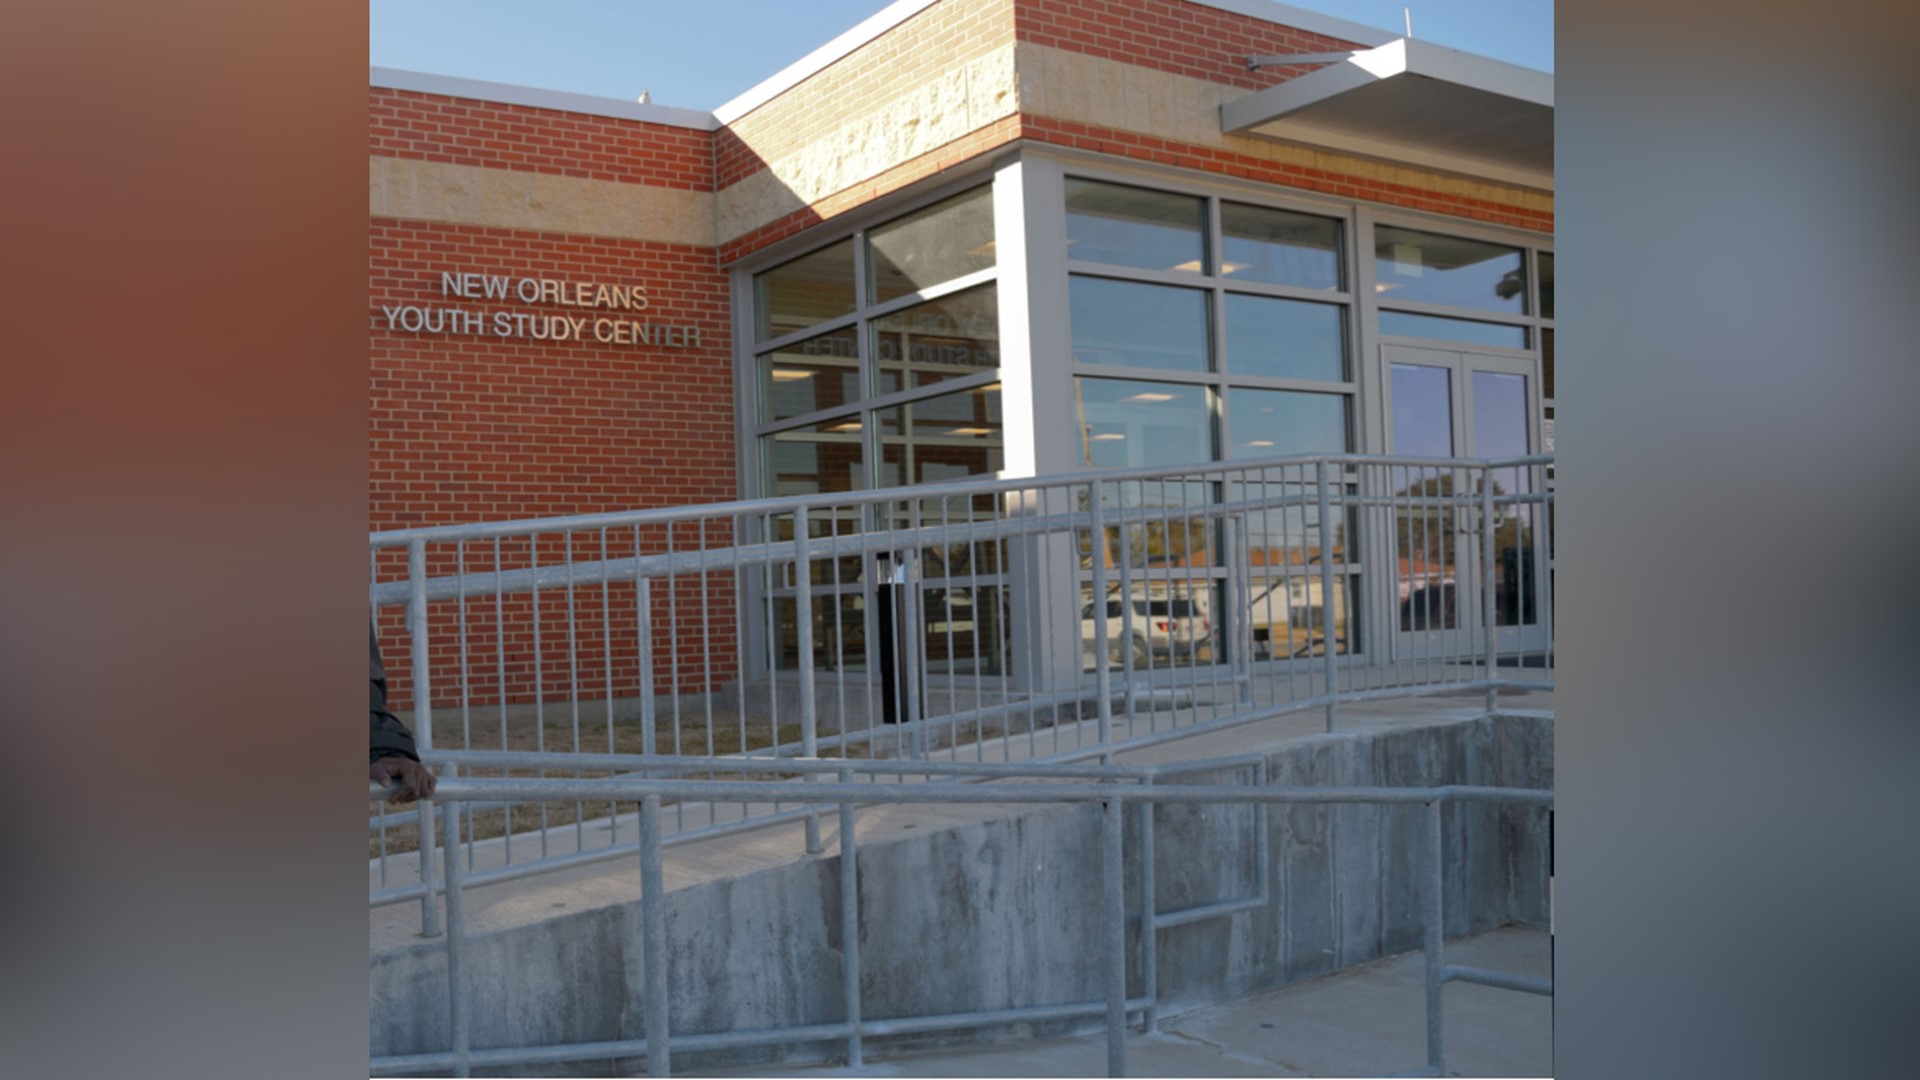 Juvenile detention center jobs in michigan